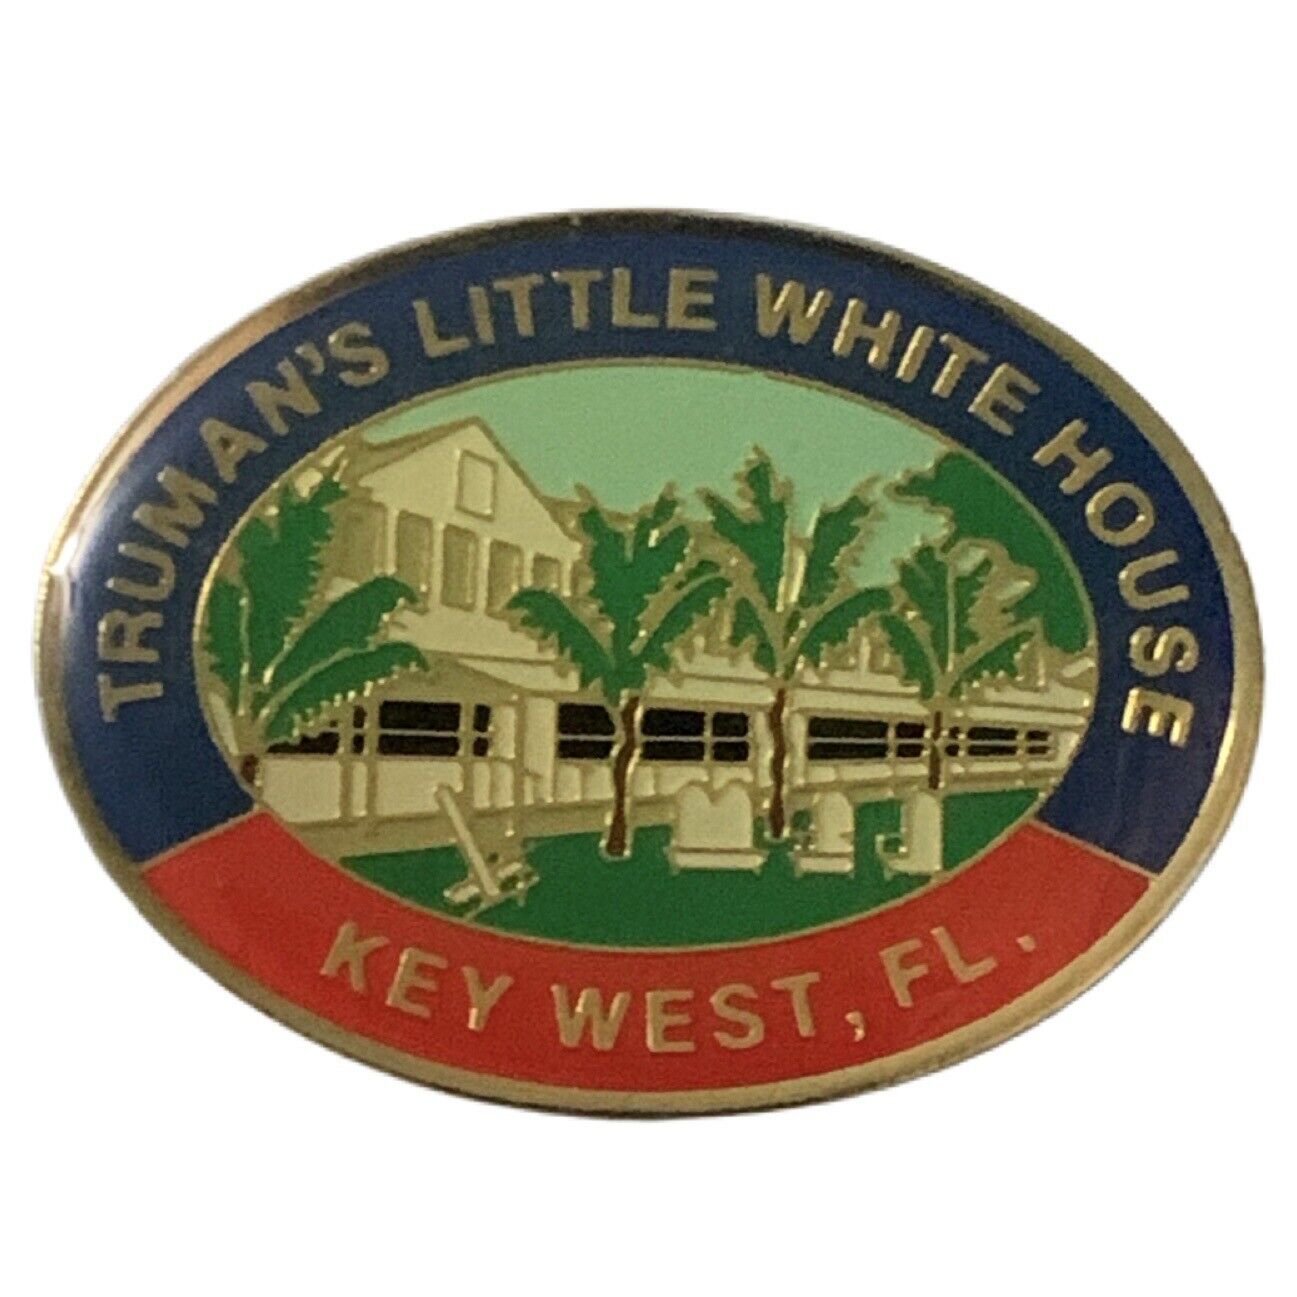 Vintage Truman Little White House Key West Florida Scenic Travel Souvenir Pin